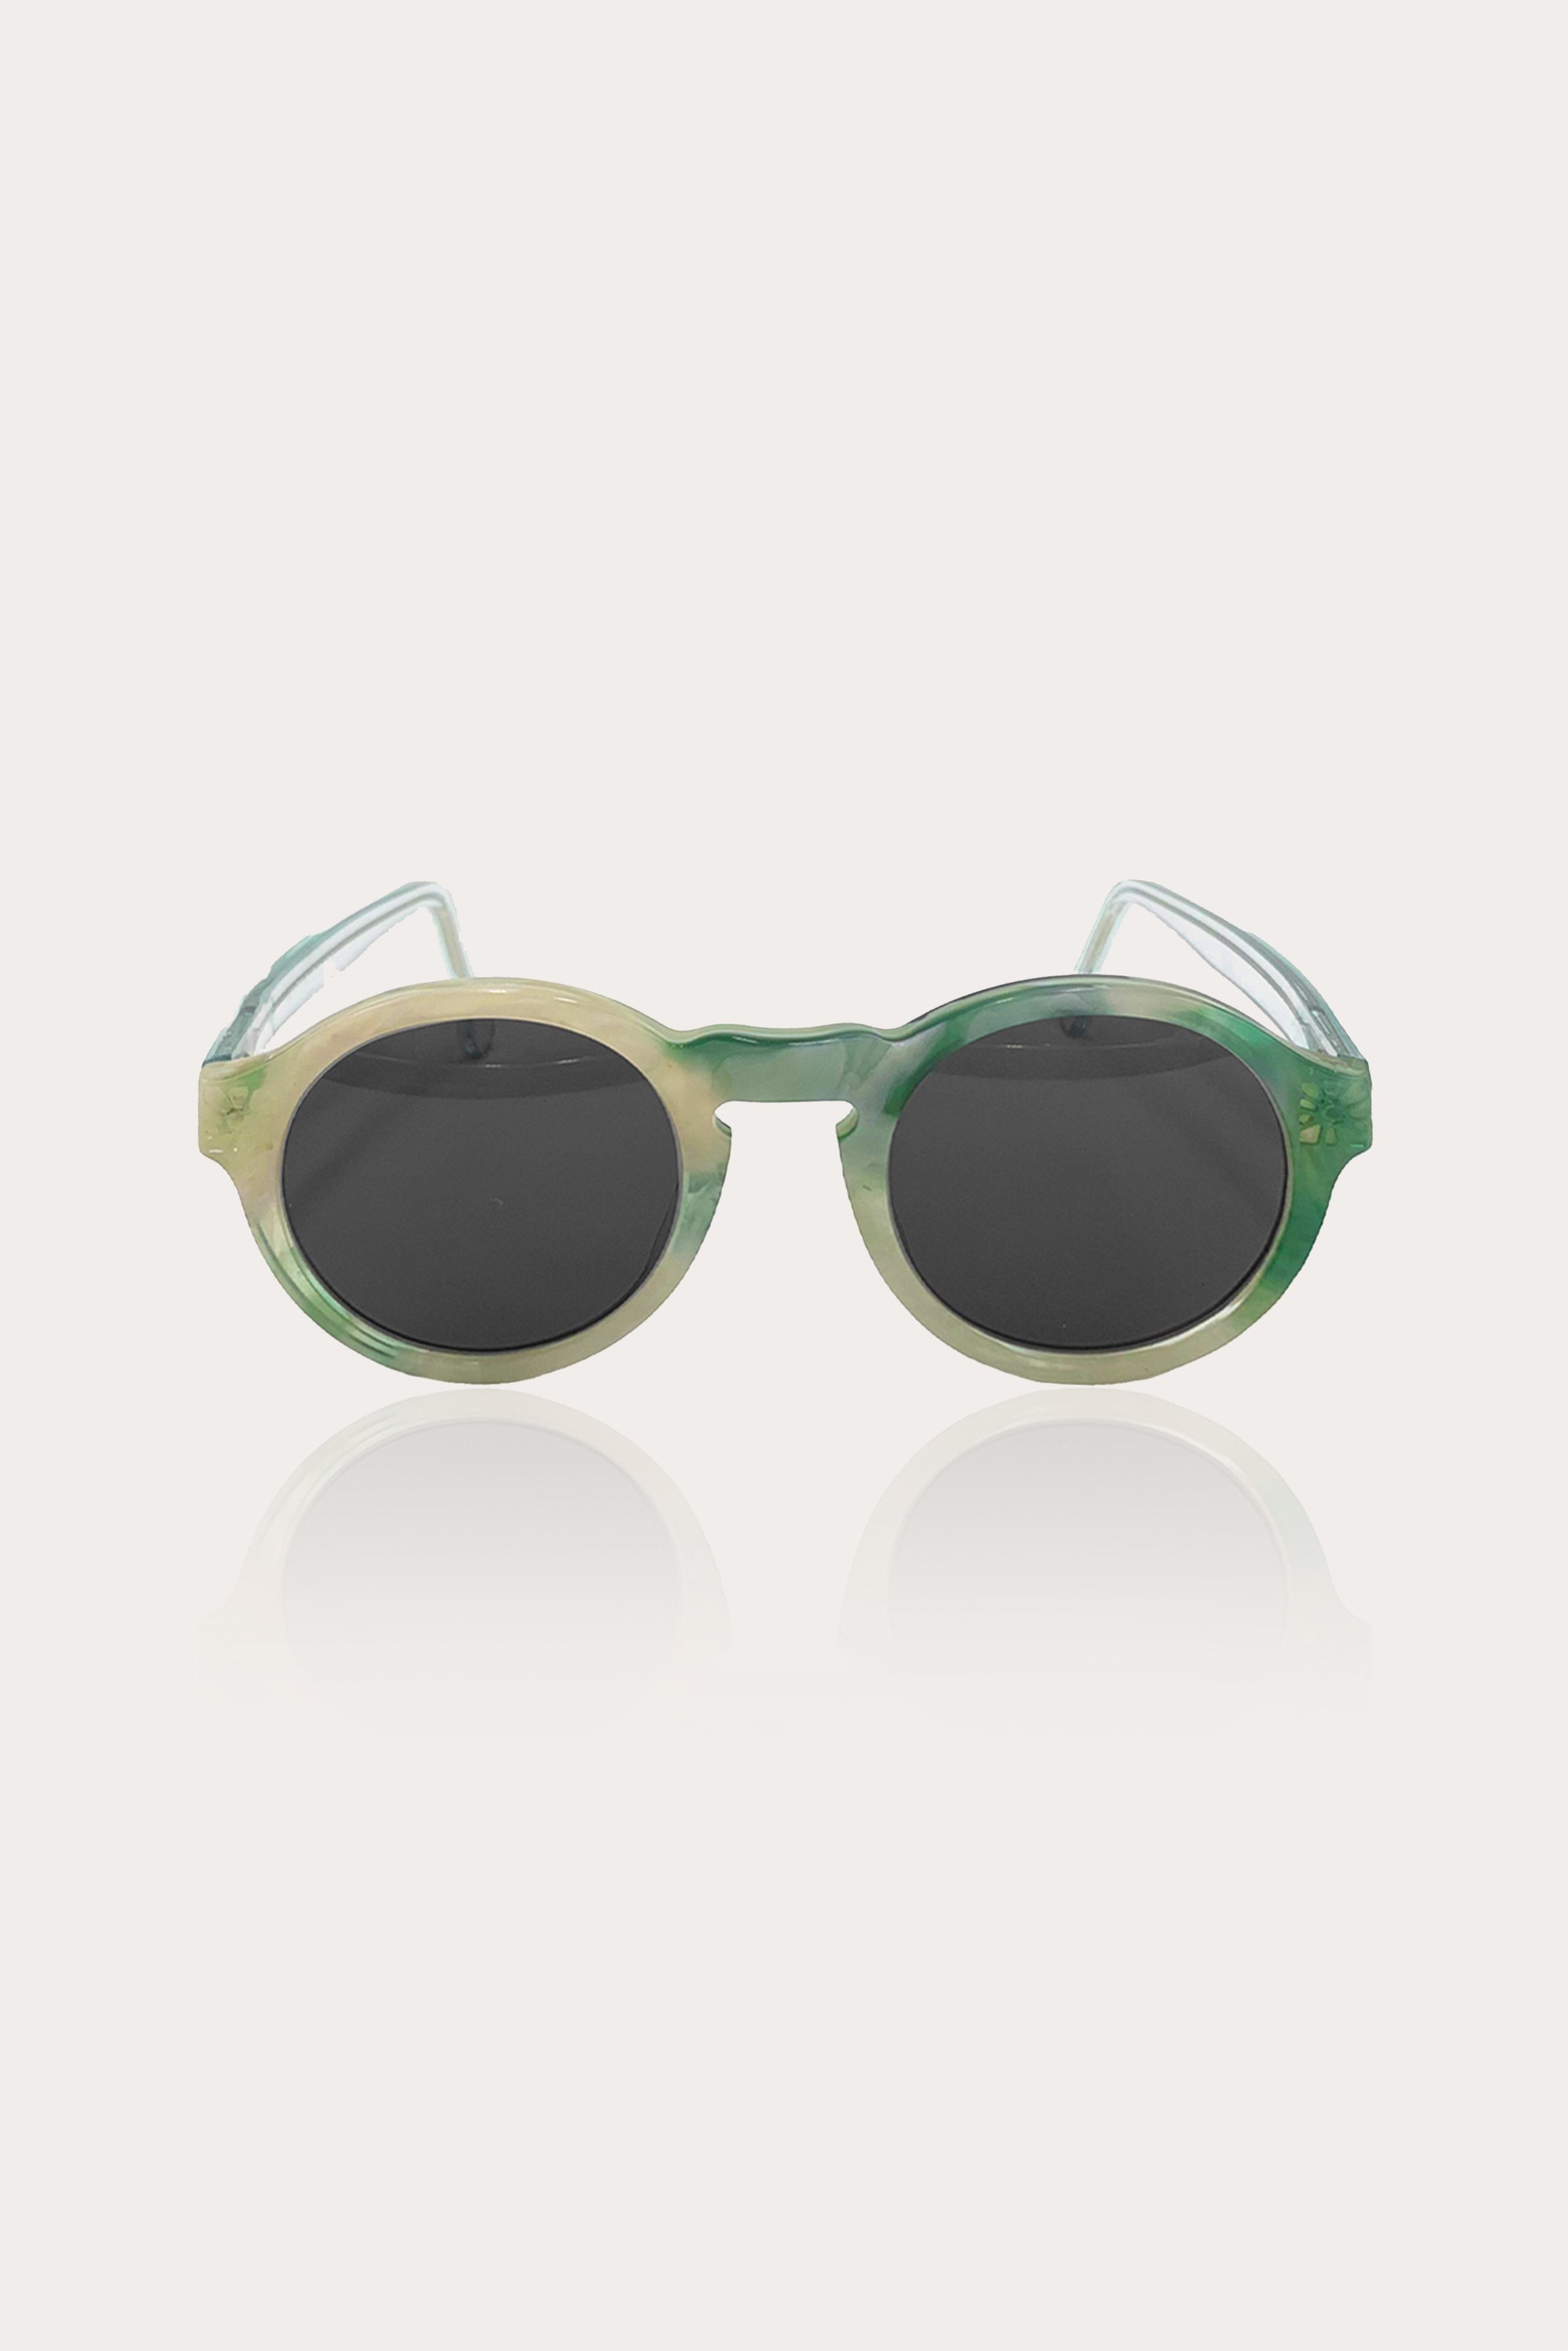 Trendy Polarized Sunglasses For Women Retro Womens Oversized